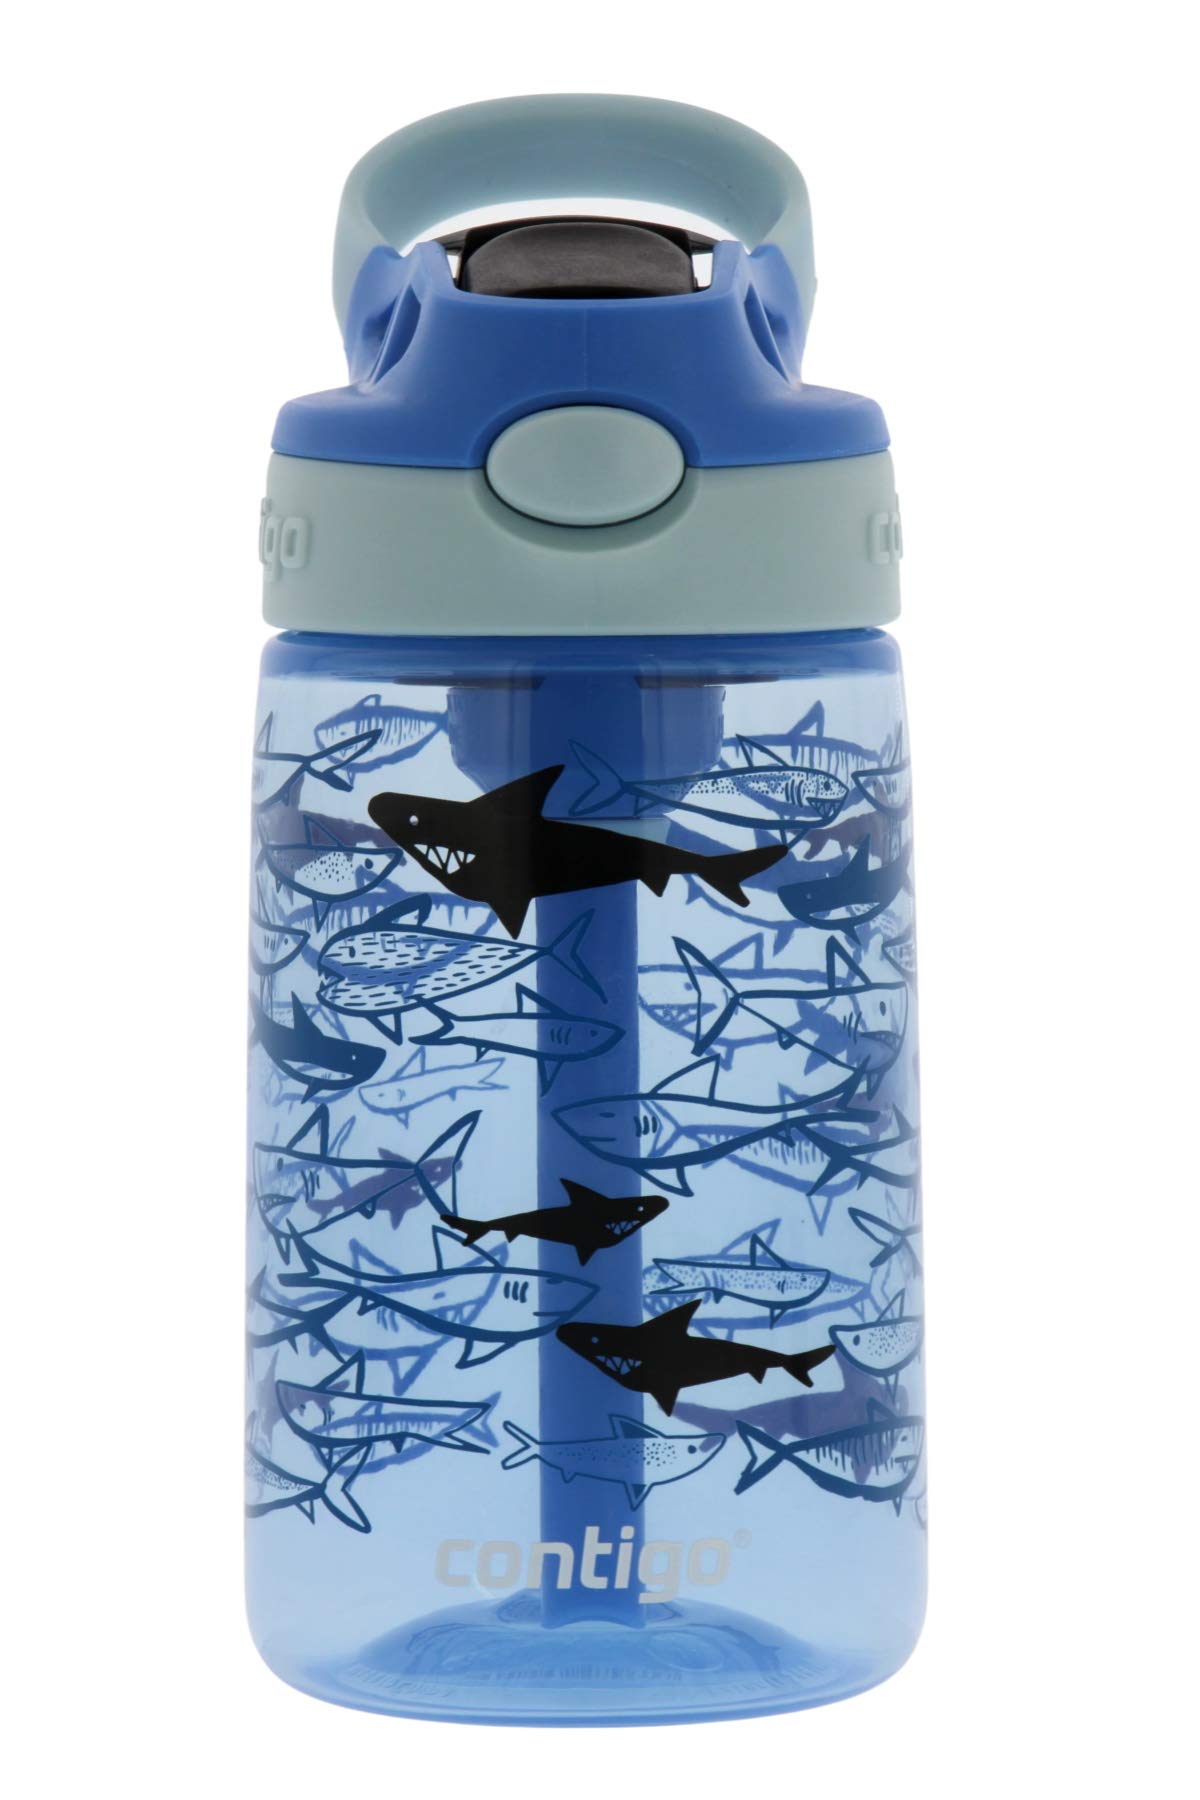  Contigo Kids Water Bottle, 14 oz with Autospout